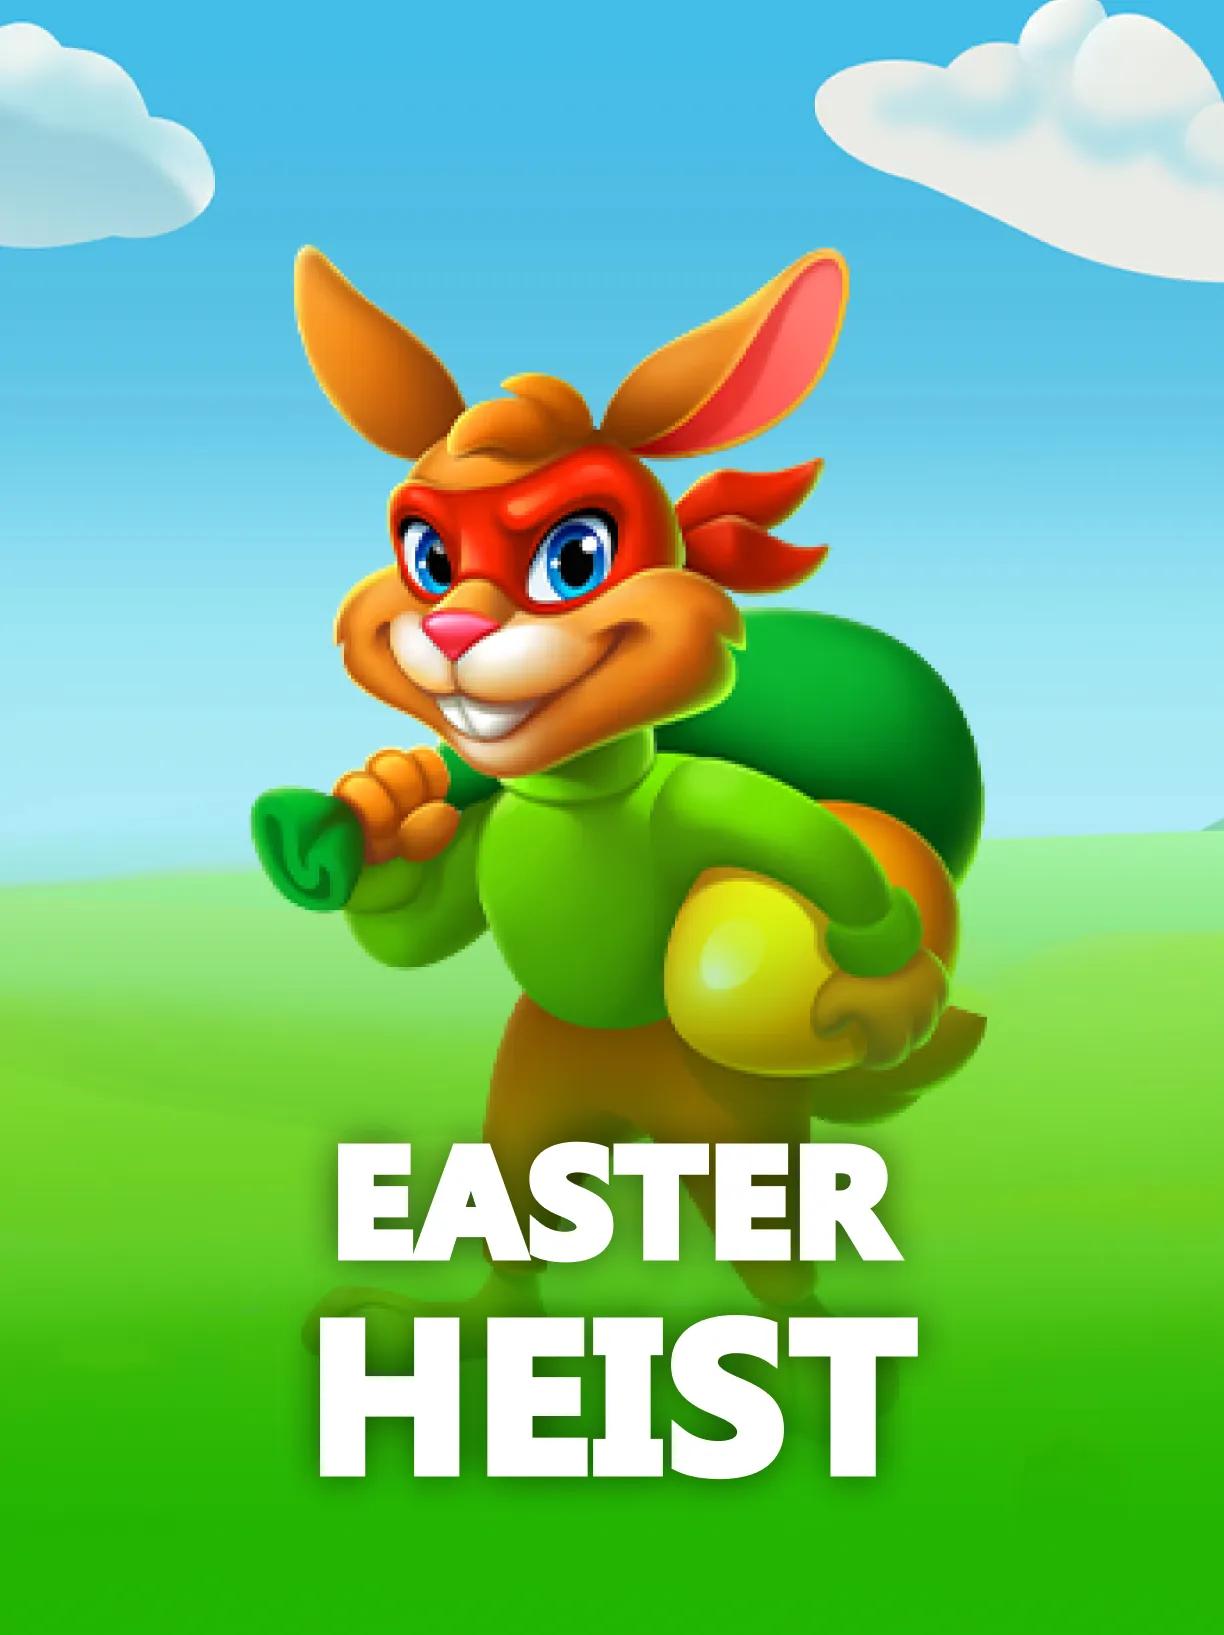 Easter Heist